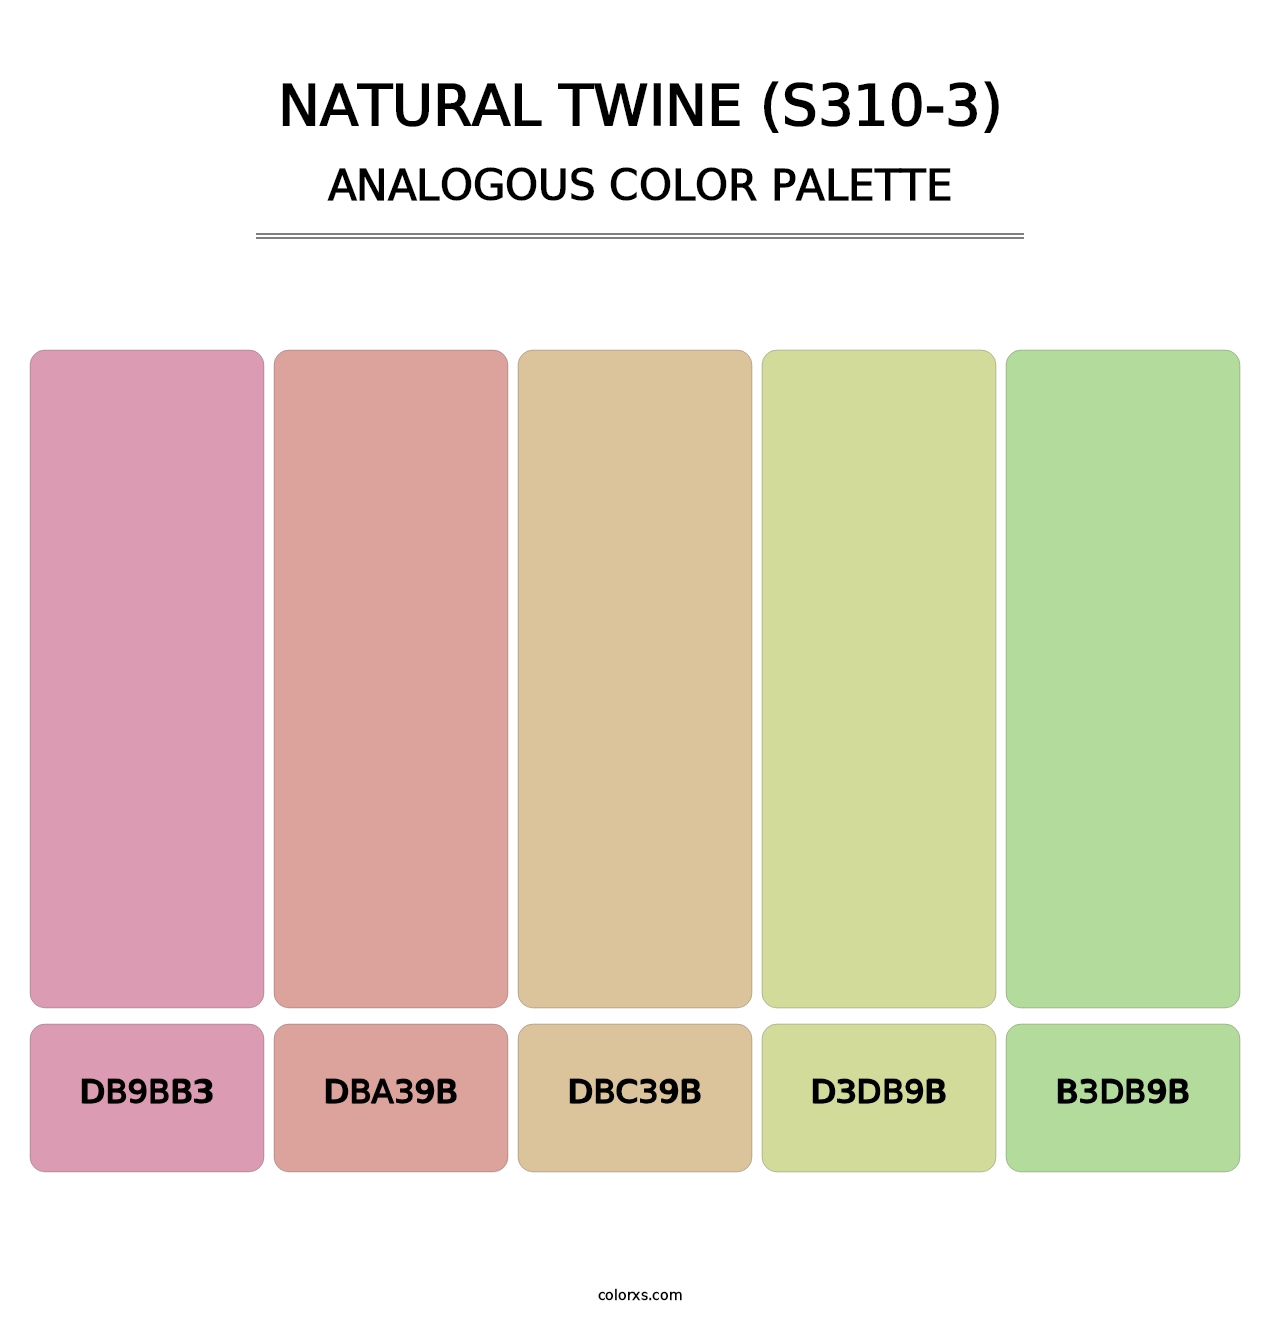 Natural Twine (S310-3) - Analogous Color Palette